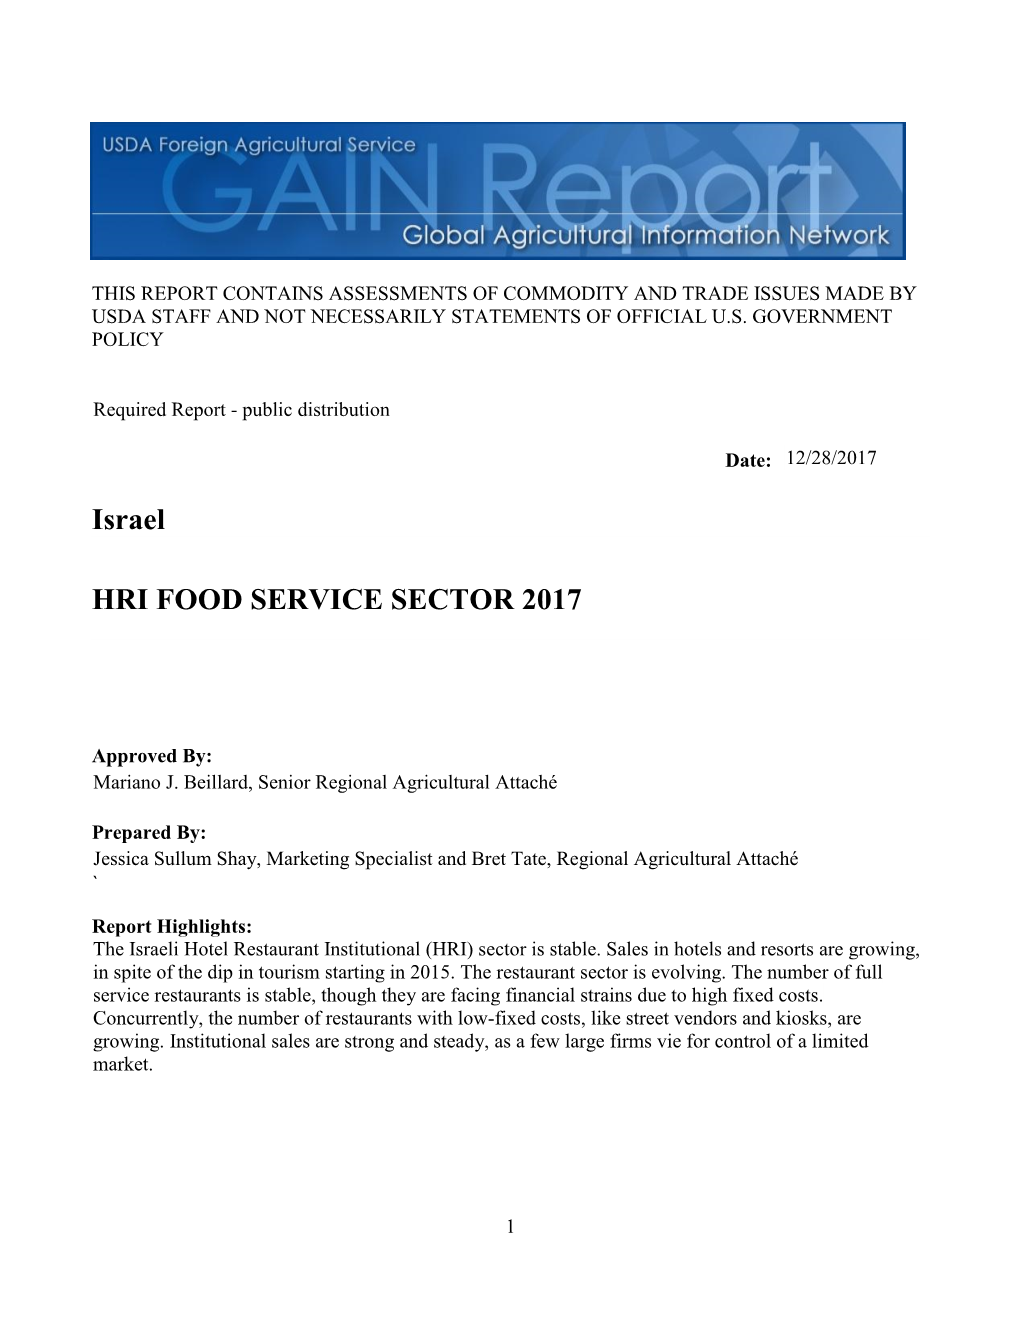 HRI FOOD SERVICE SECTOR 2017 Israel